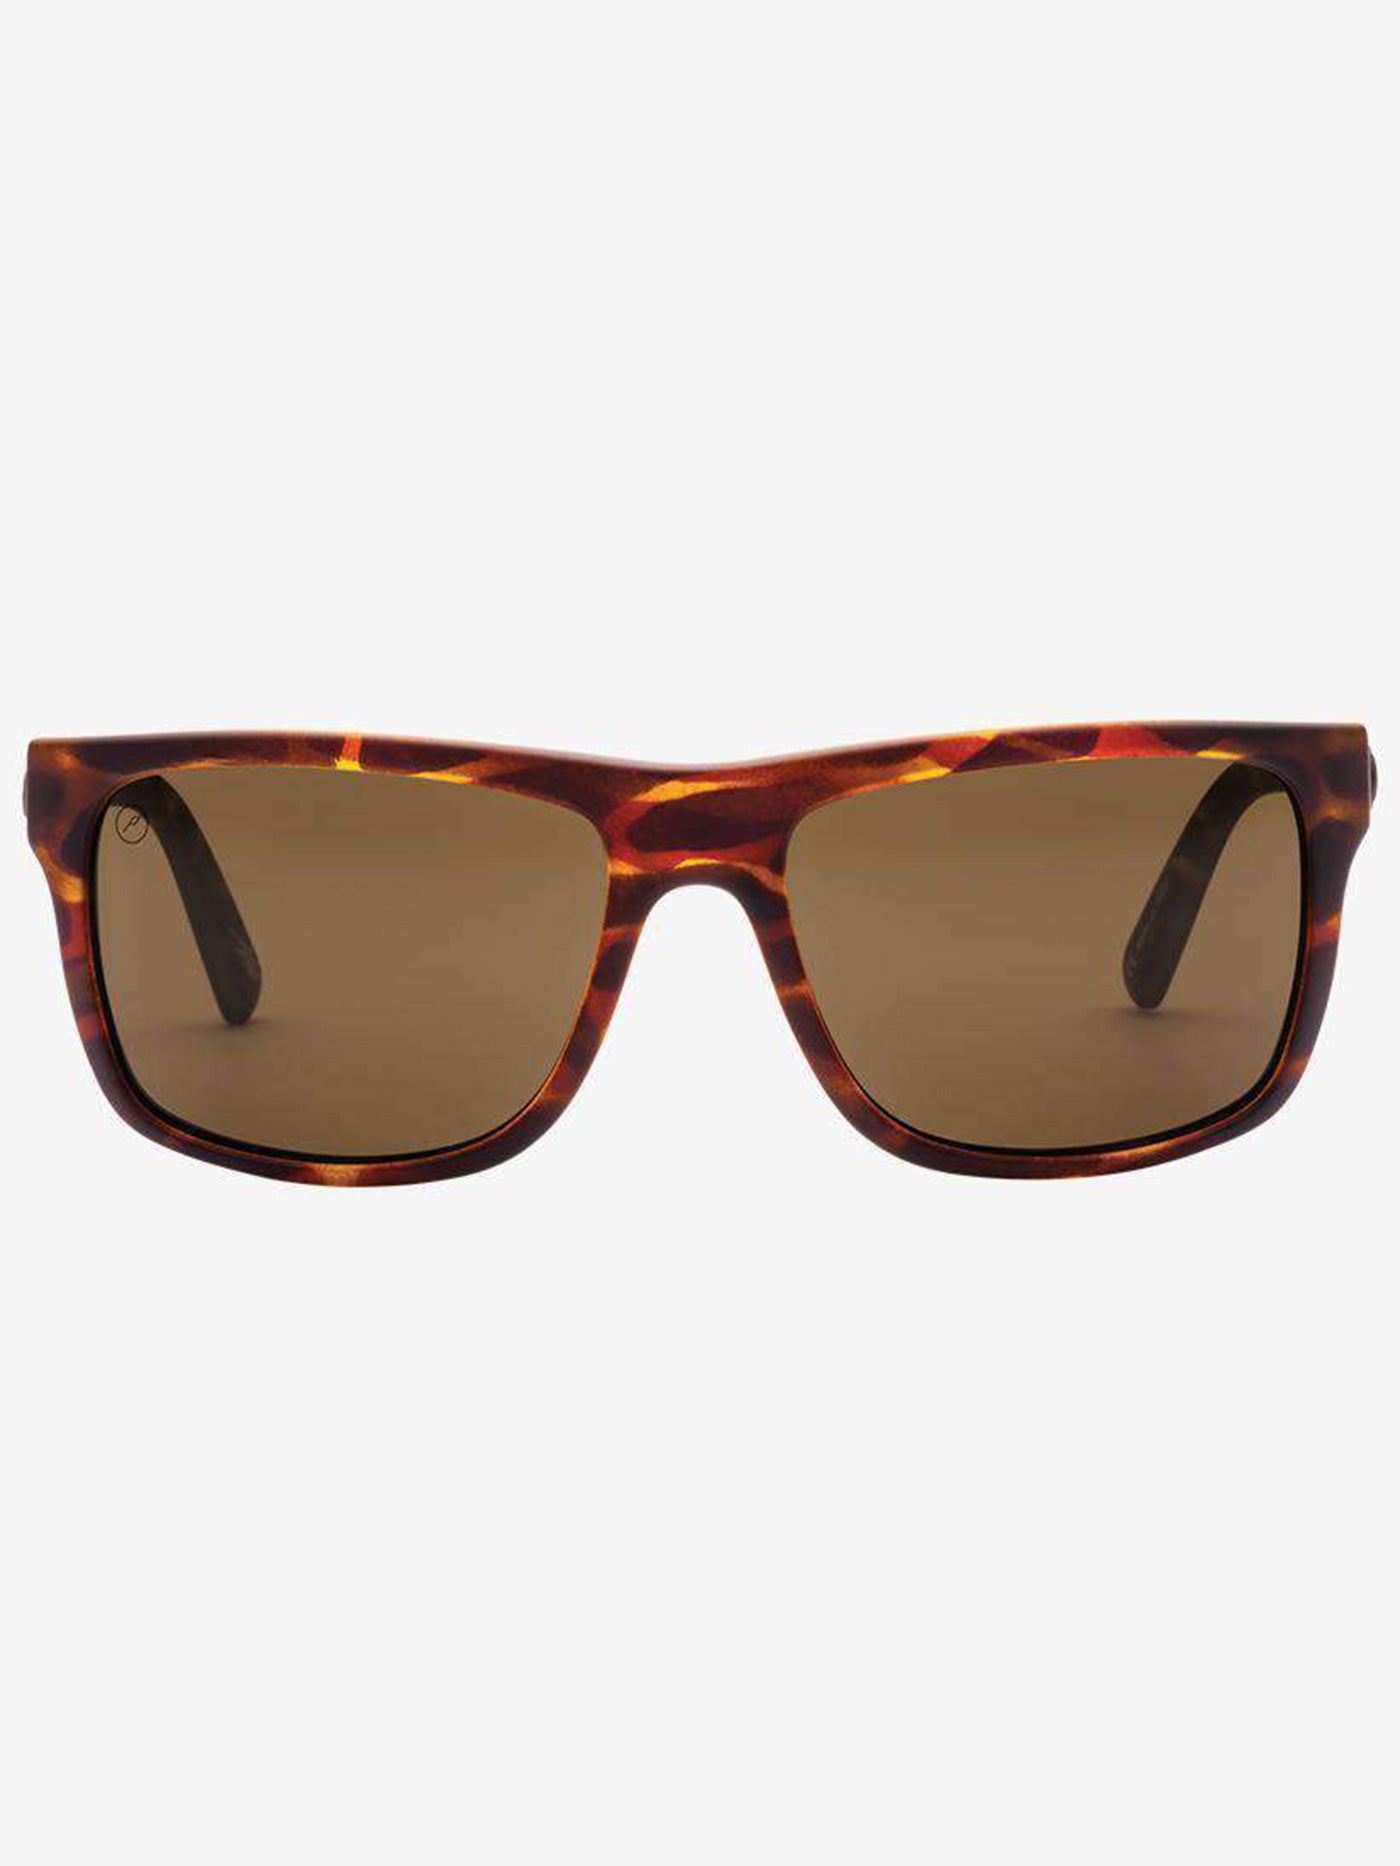 Electric Swingarm Matte Tortoise Polarized Sunglasses